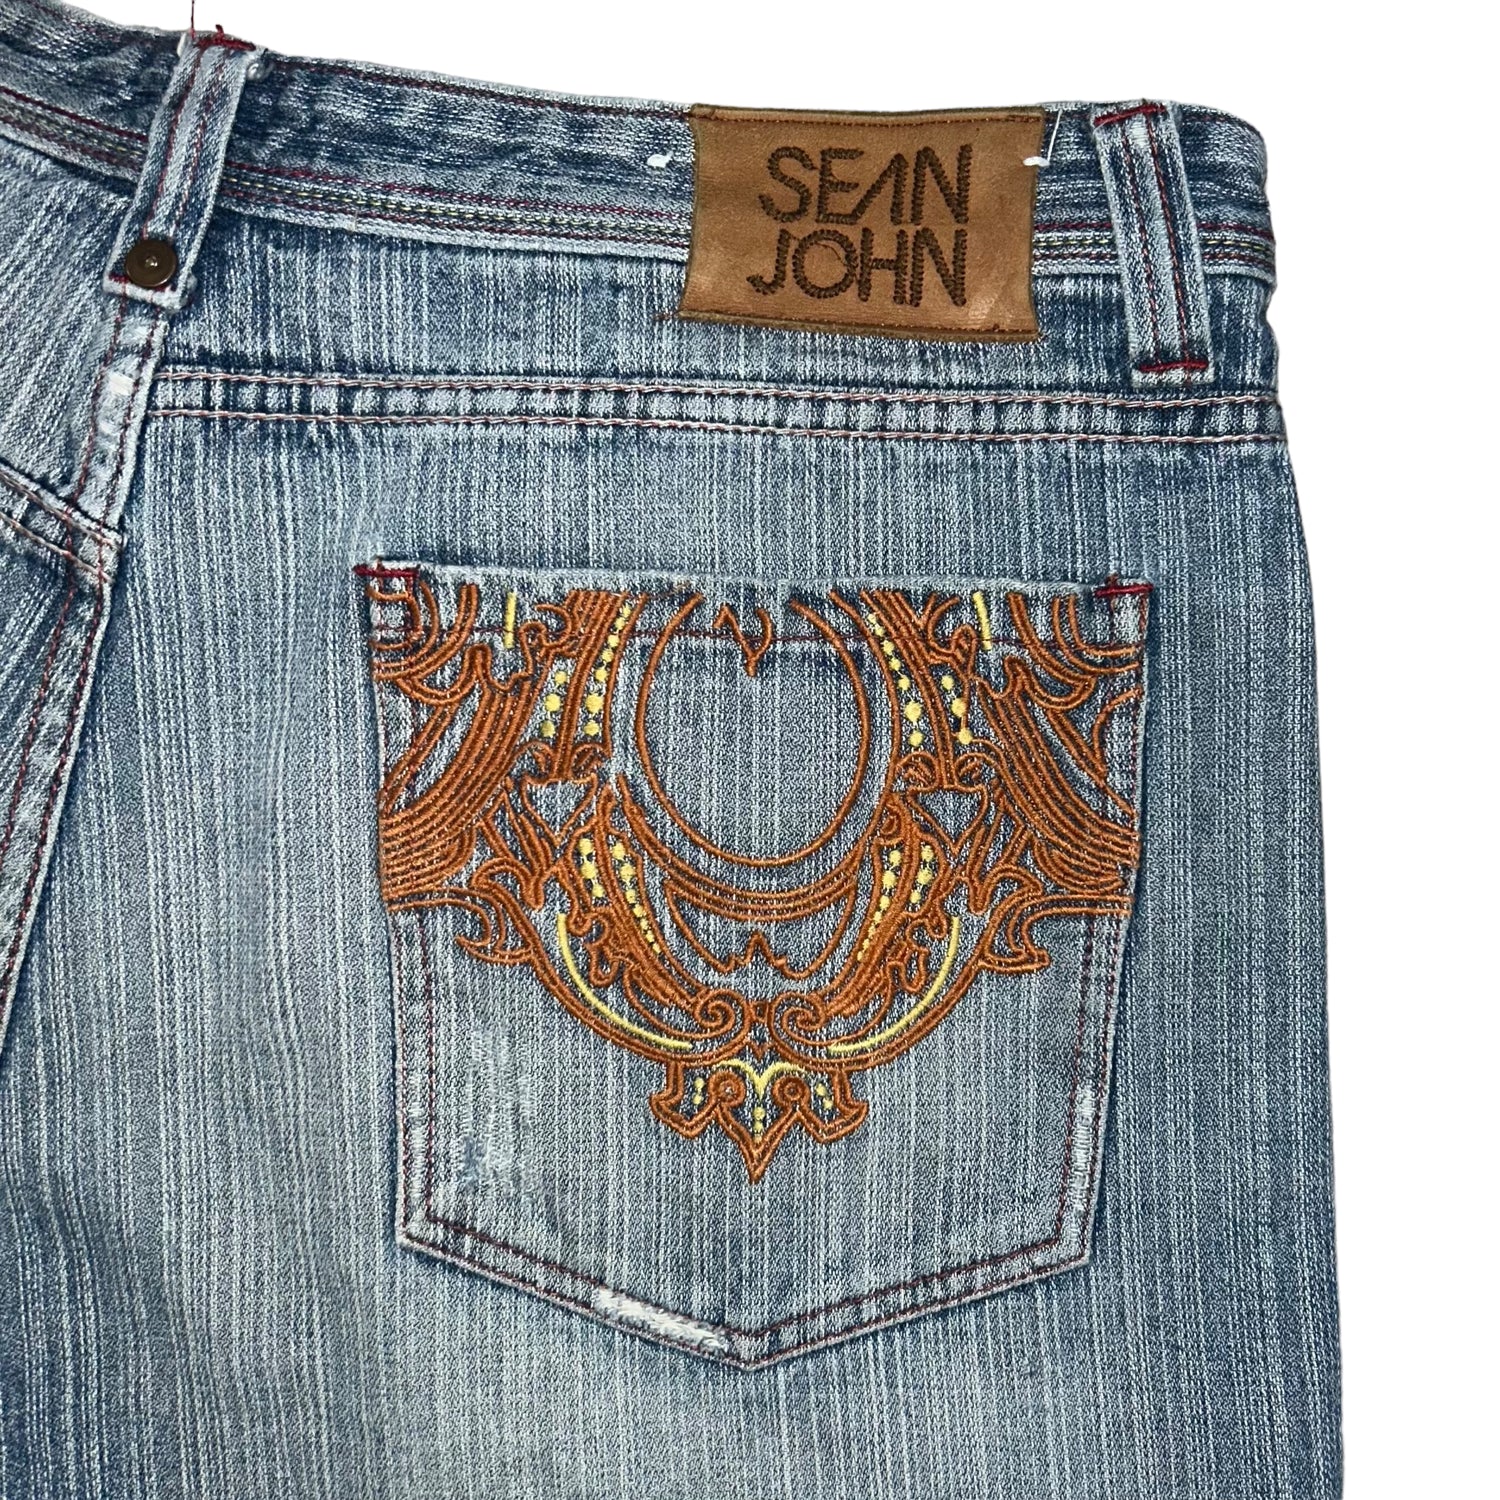 Baggy Shorts Sean John (38 USA / XXL)